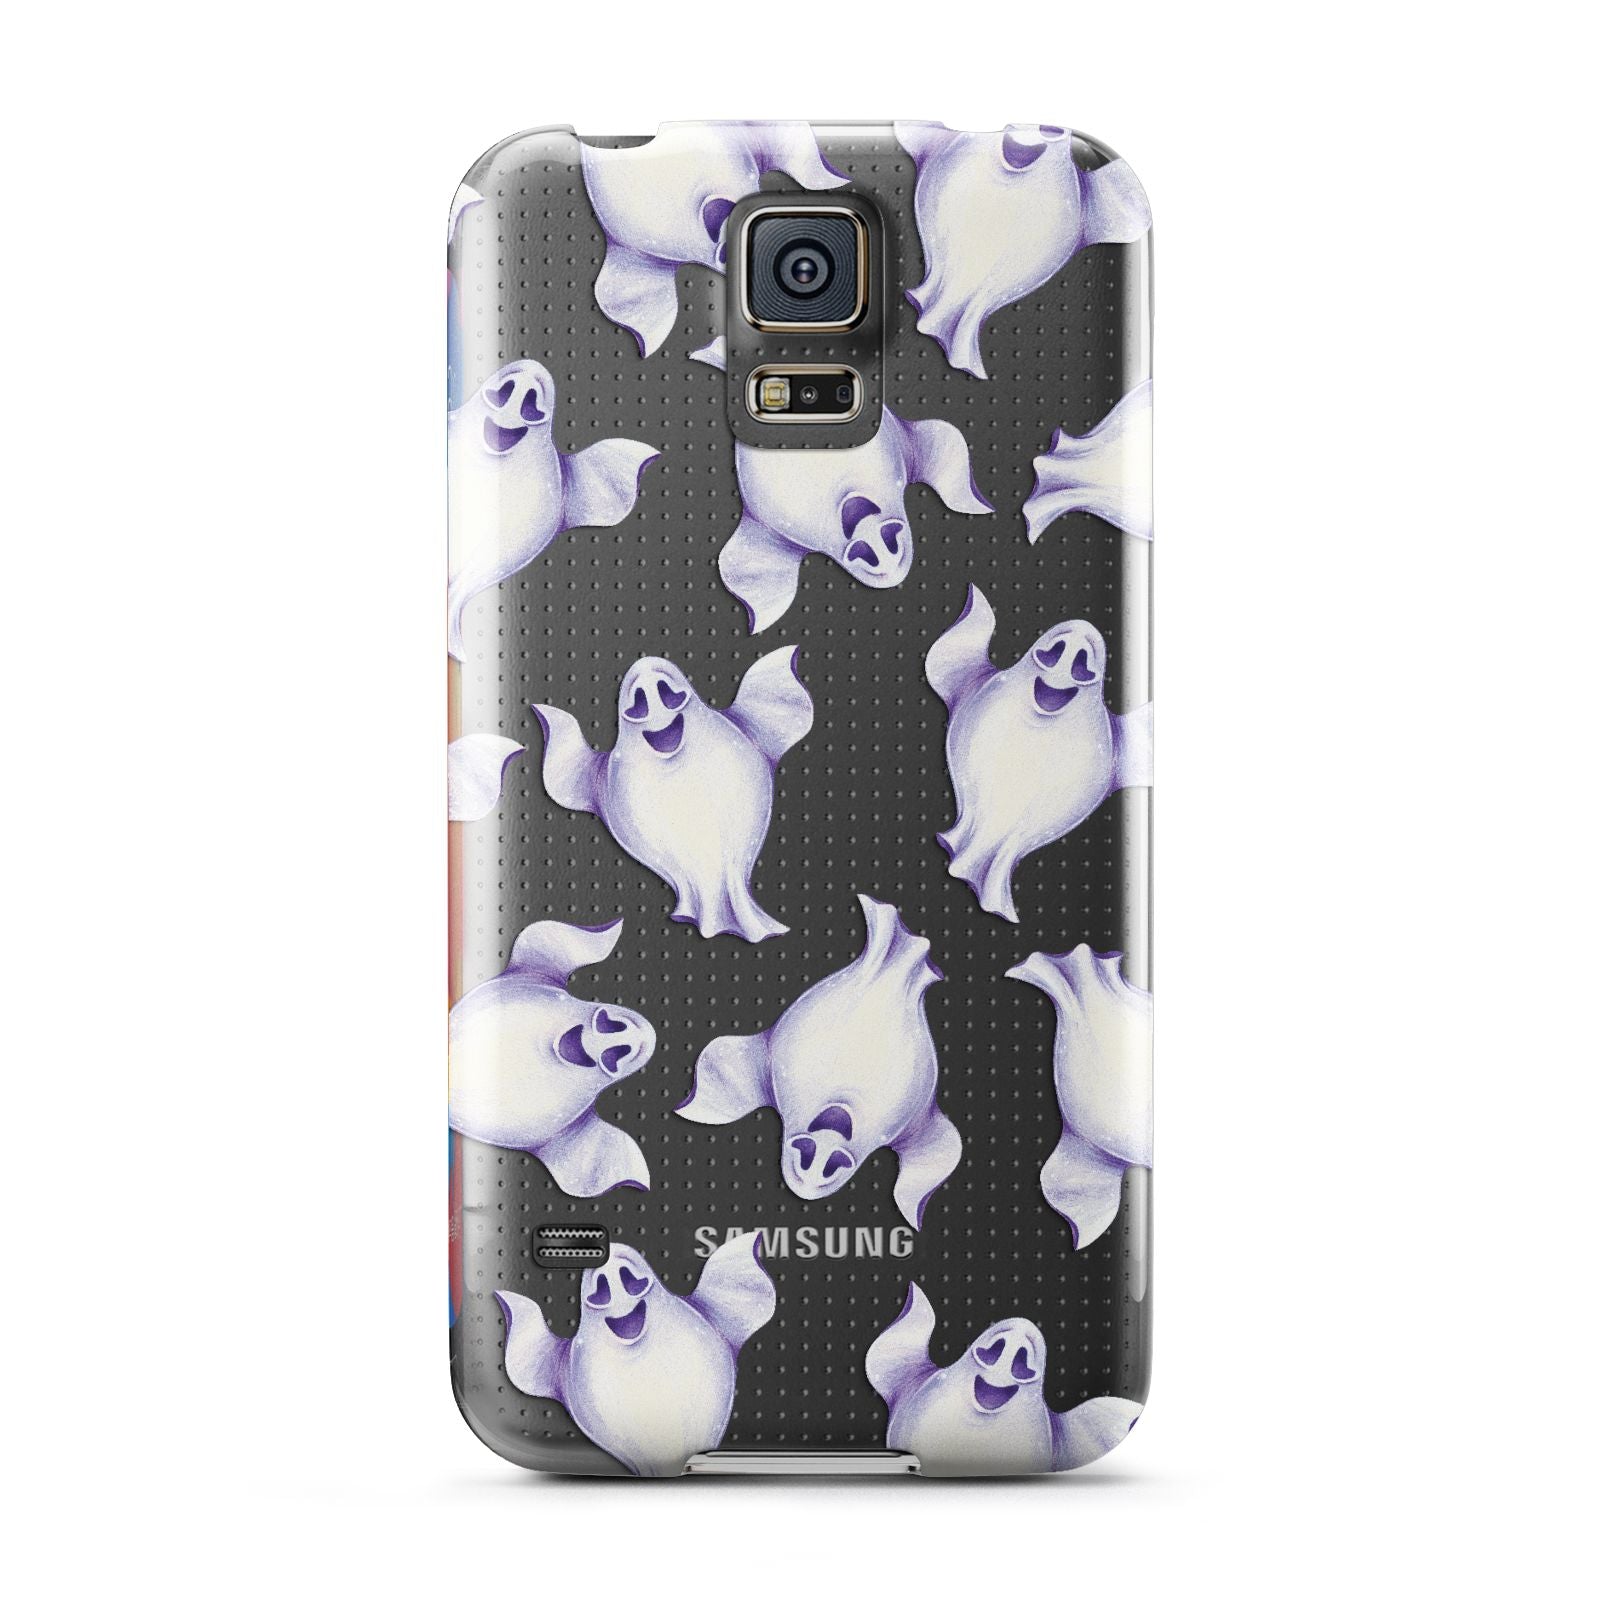 Ghost Halloween Samsung Galaxy S5 Case